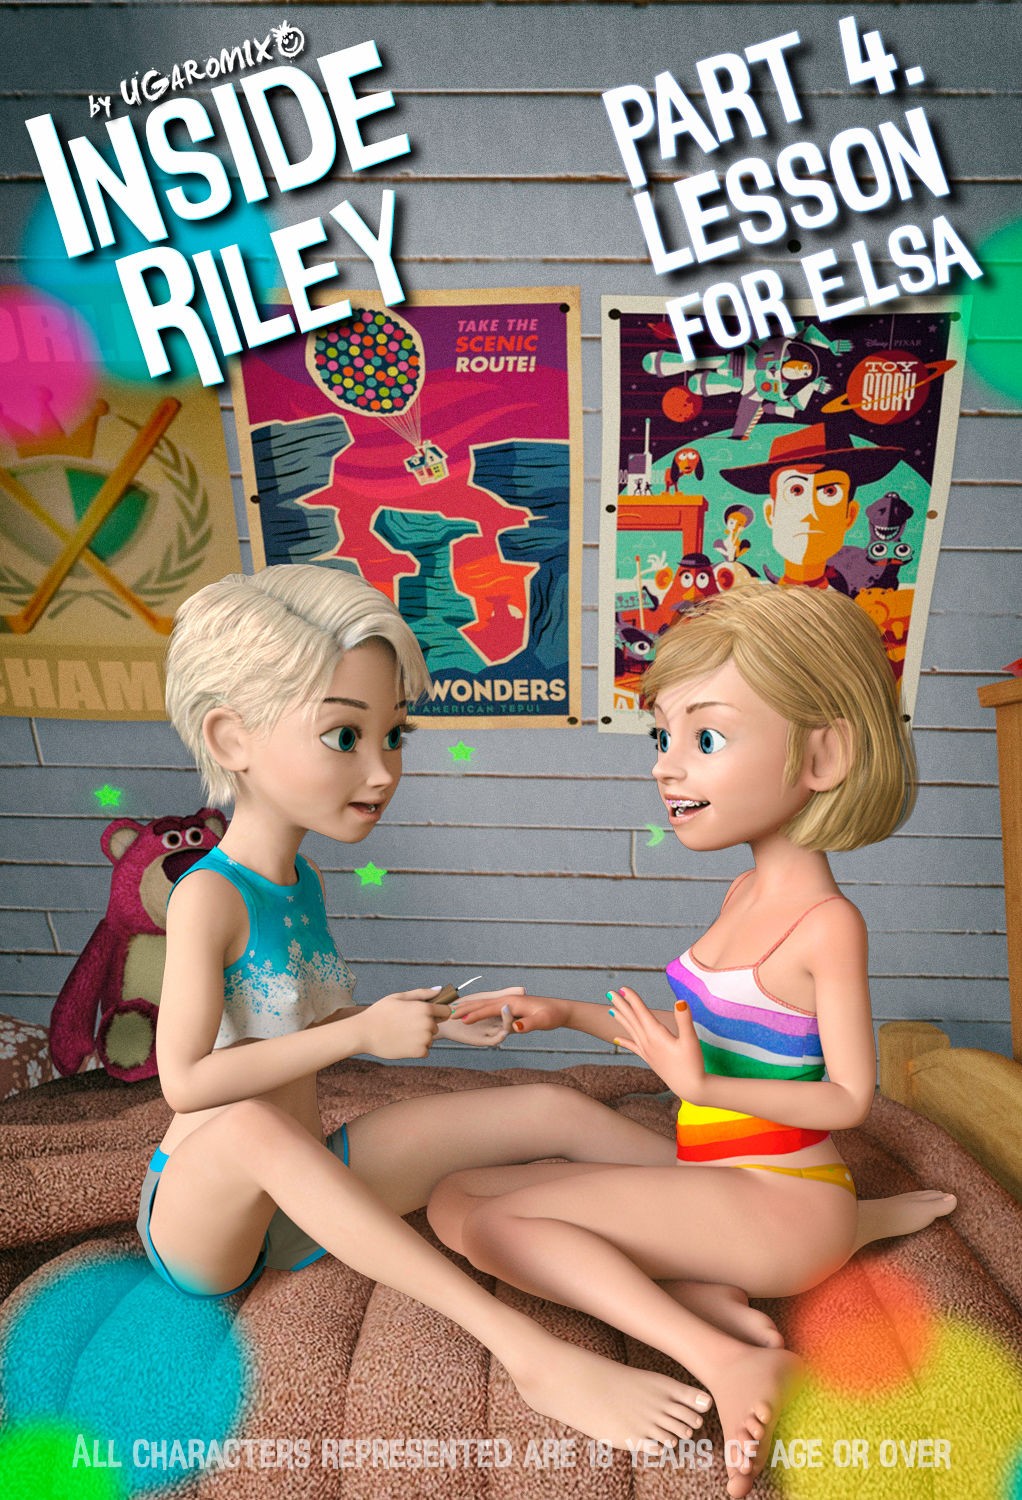 Inside Riley 4. Lesson For Elsa porn comic picture 1